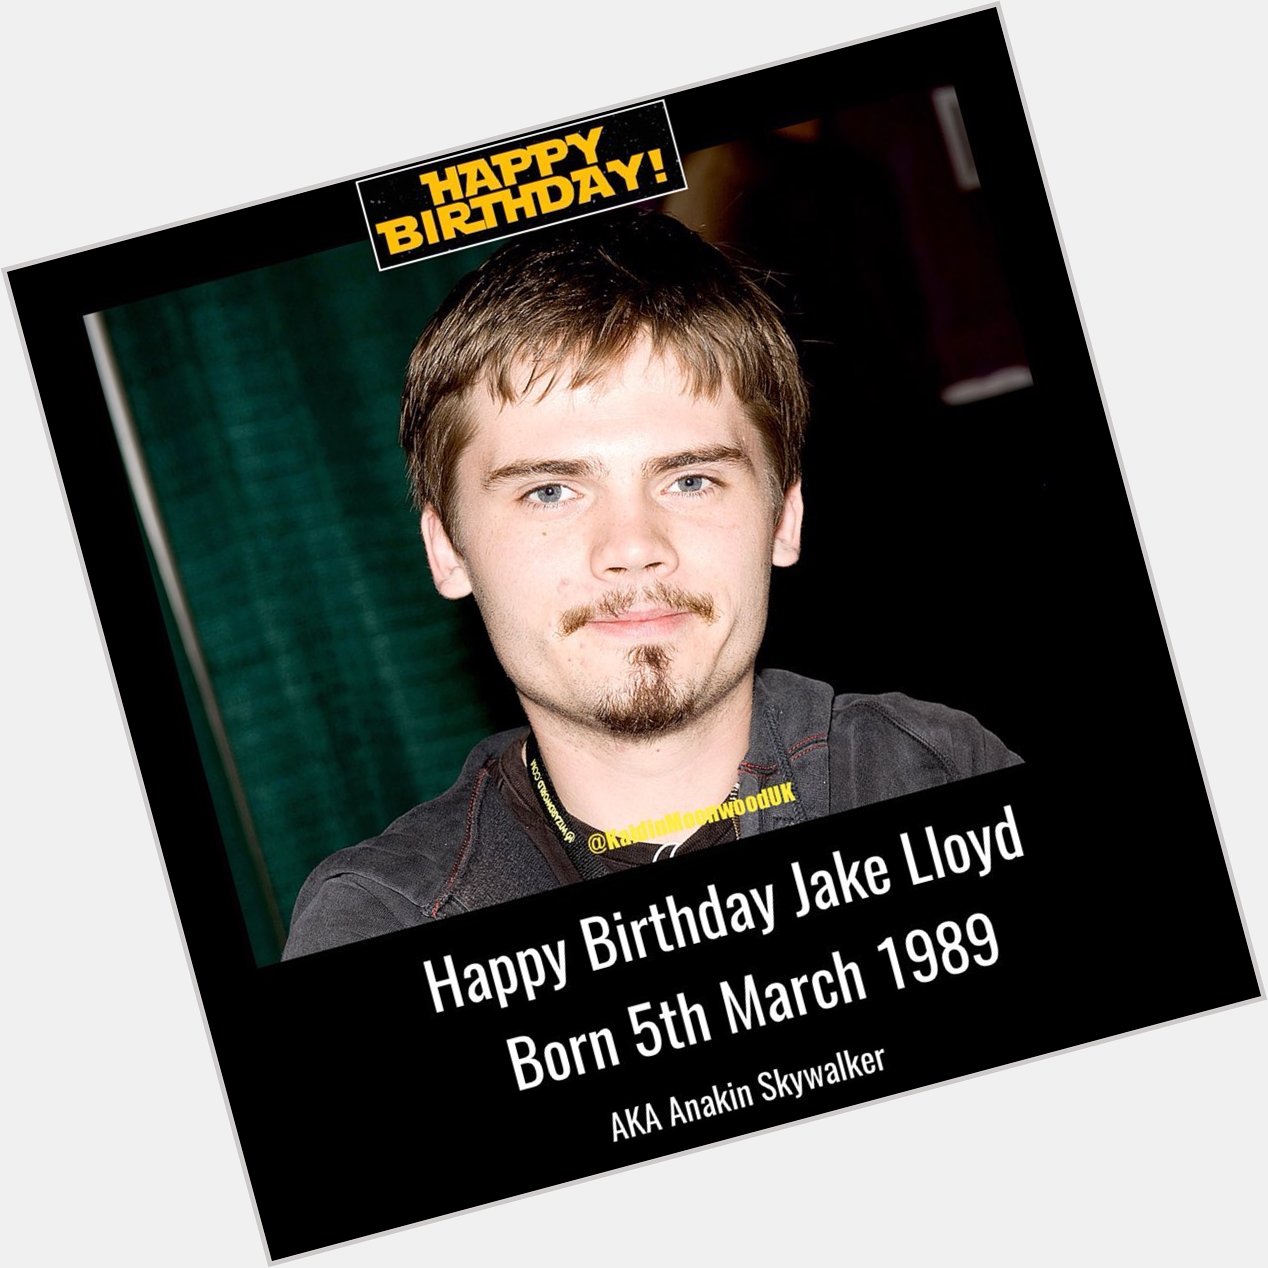  Happy Birthday to Jake Lloyd, we here wish him all the best 